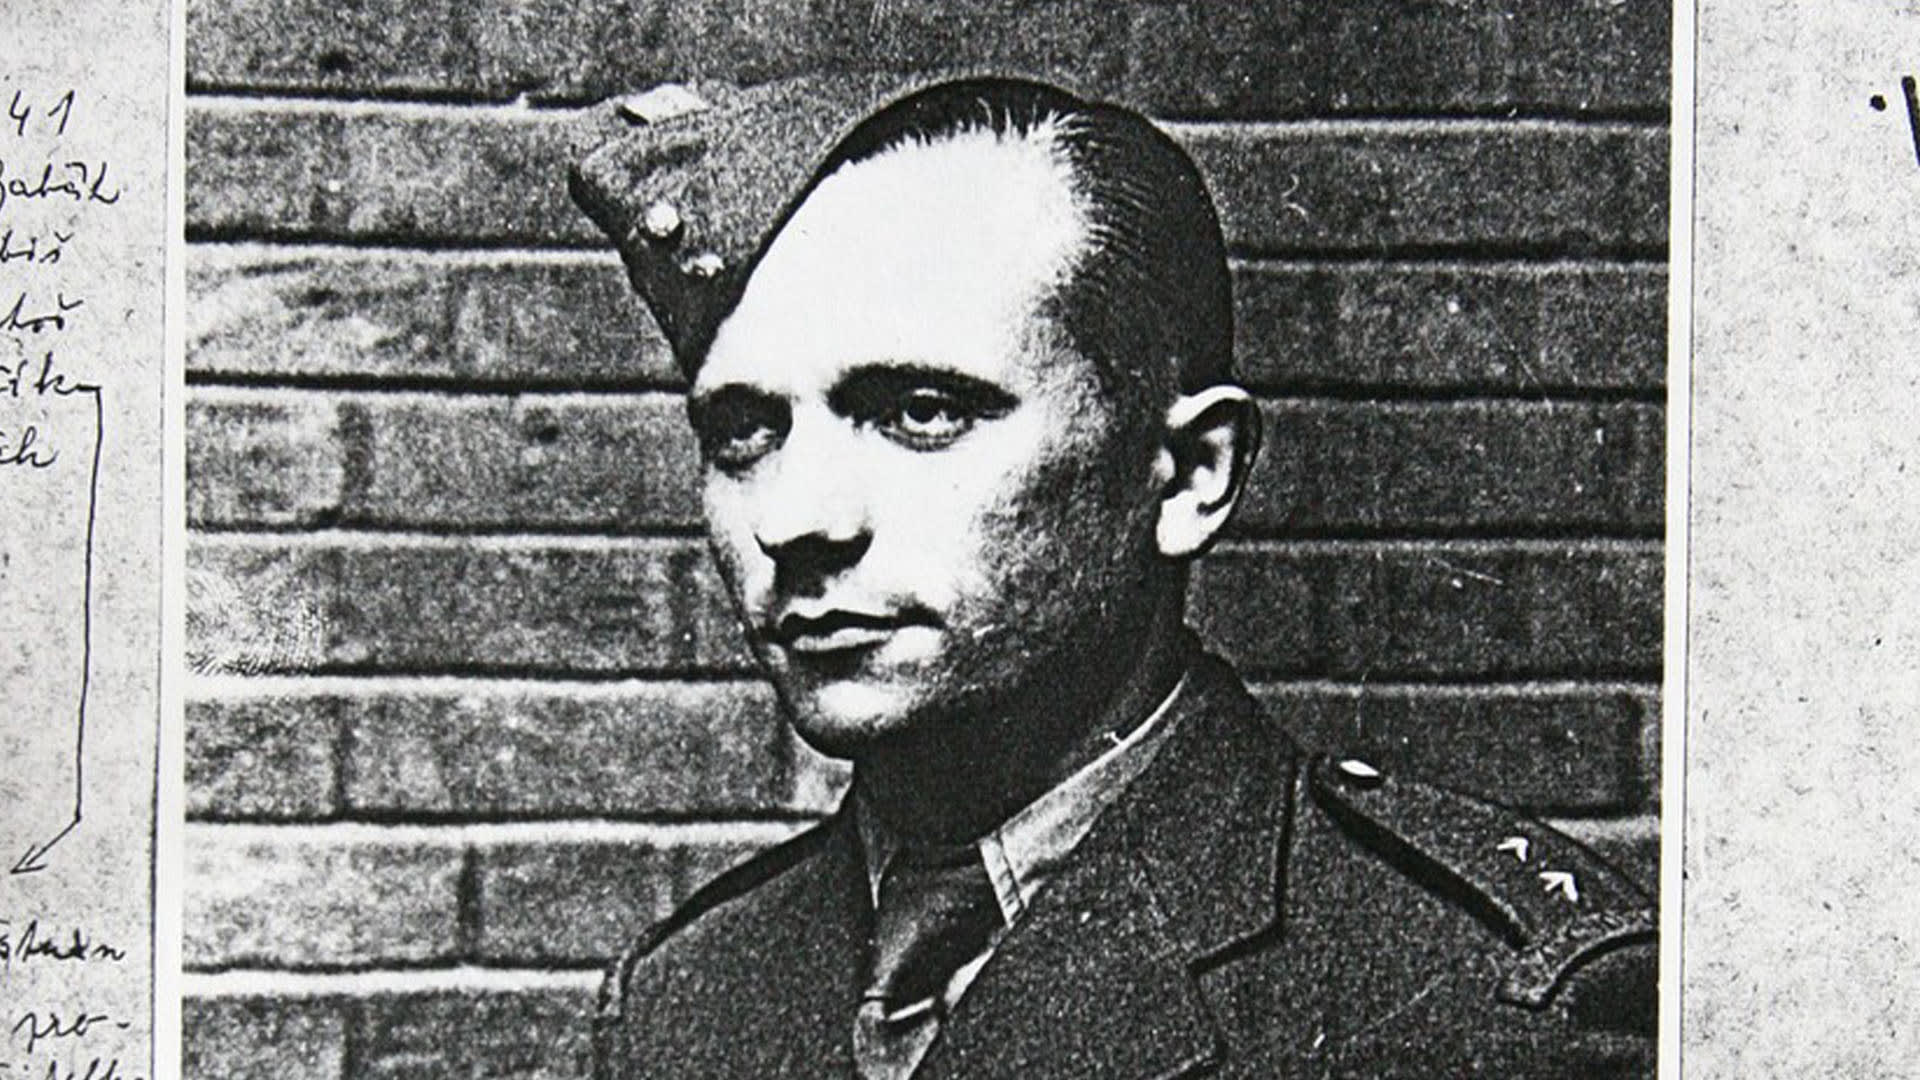 Parašutista a hrdina Jozef Gabčík.